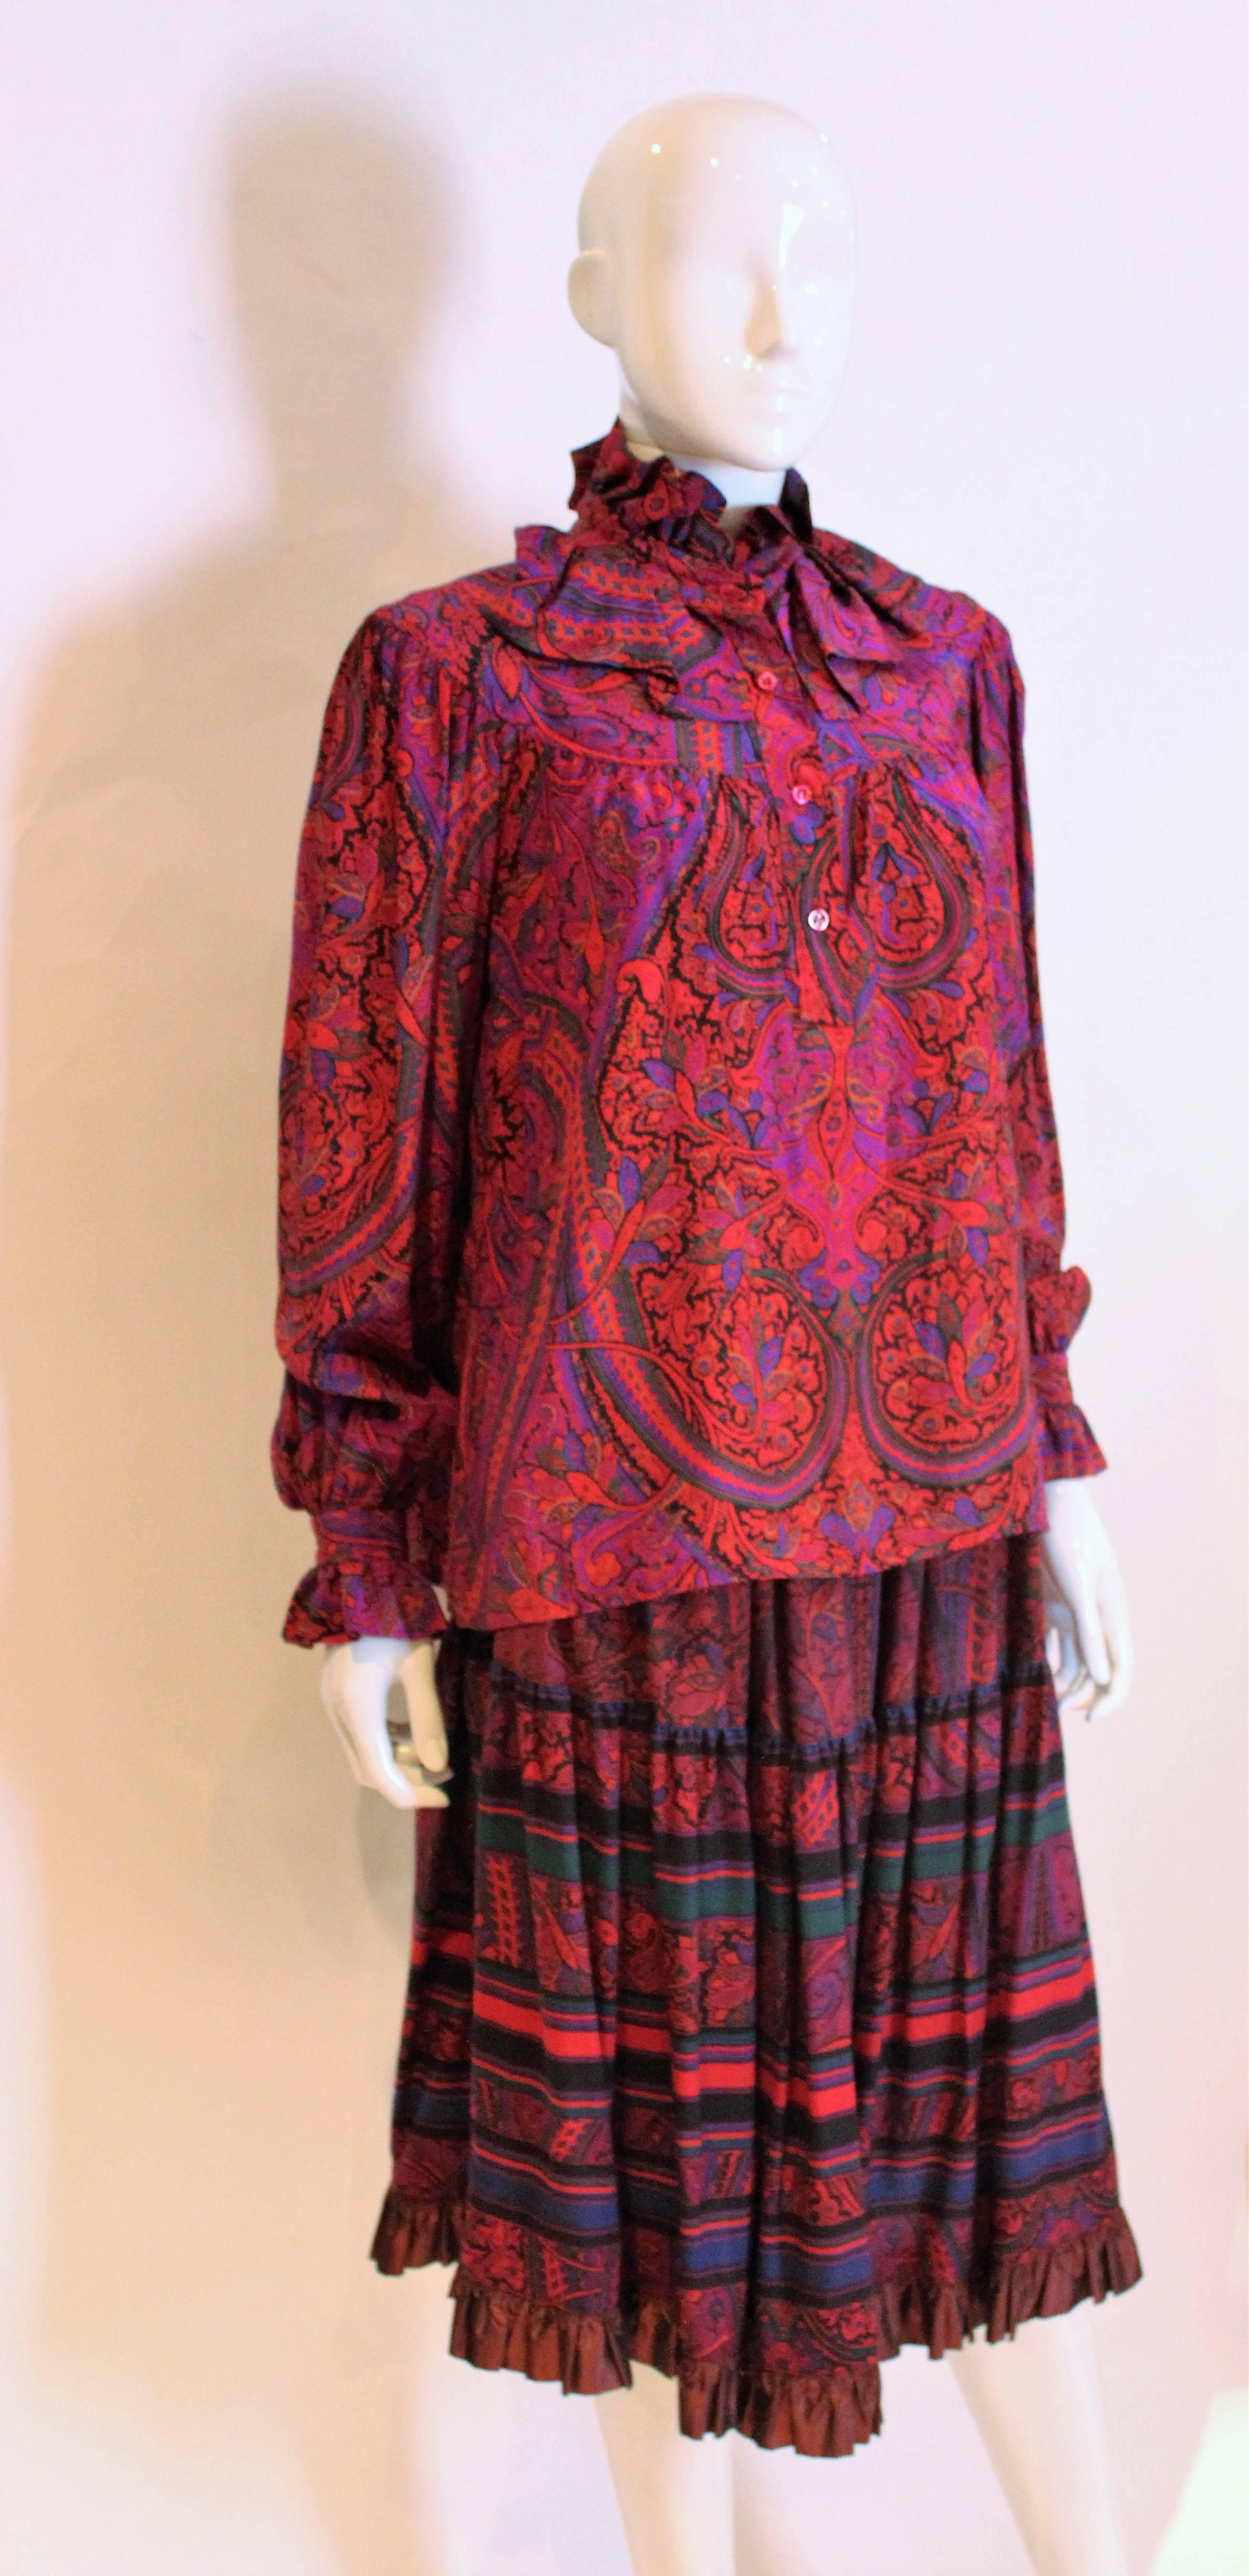 Yves Saint Laurent Silk Blouse and Woo Skirt in Paisley Design 1